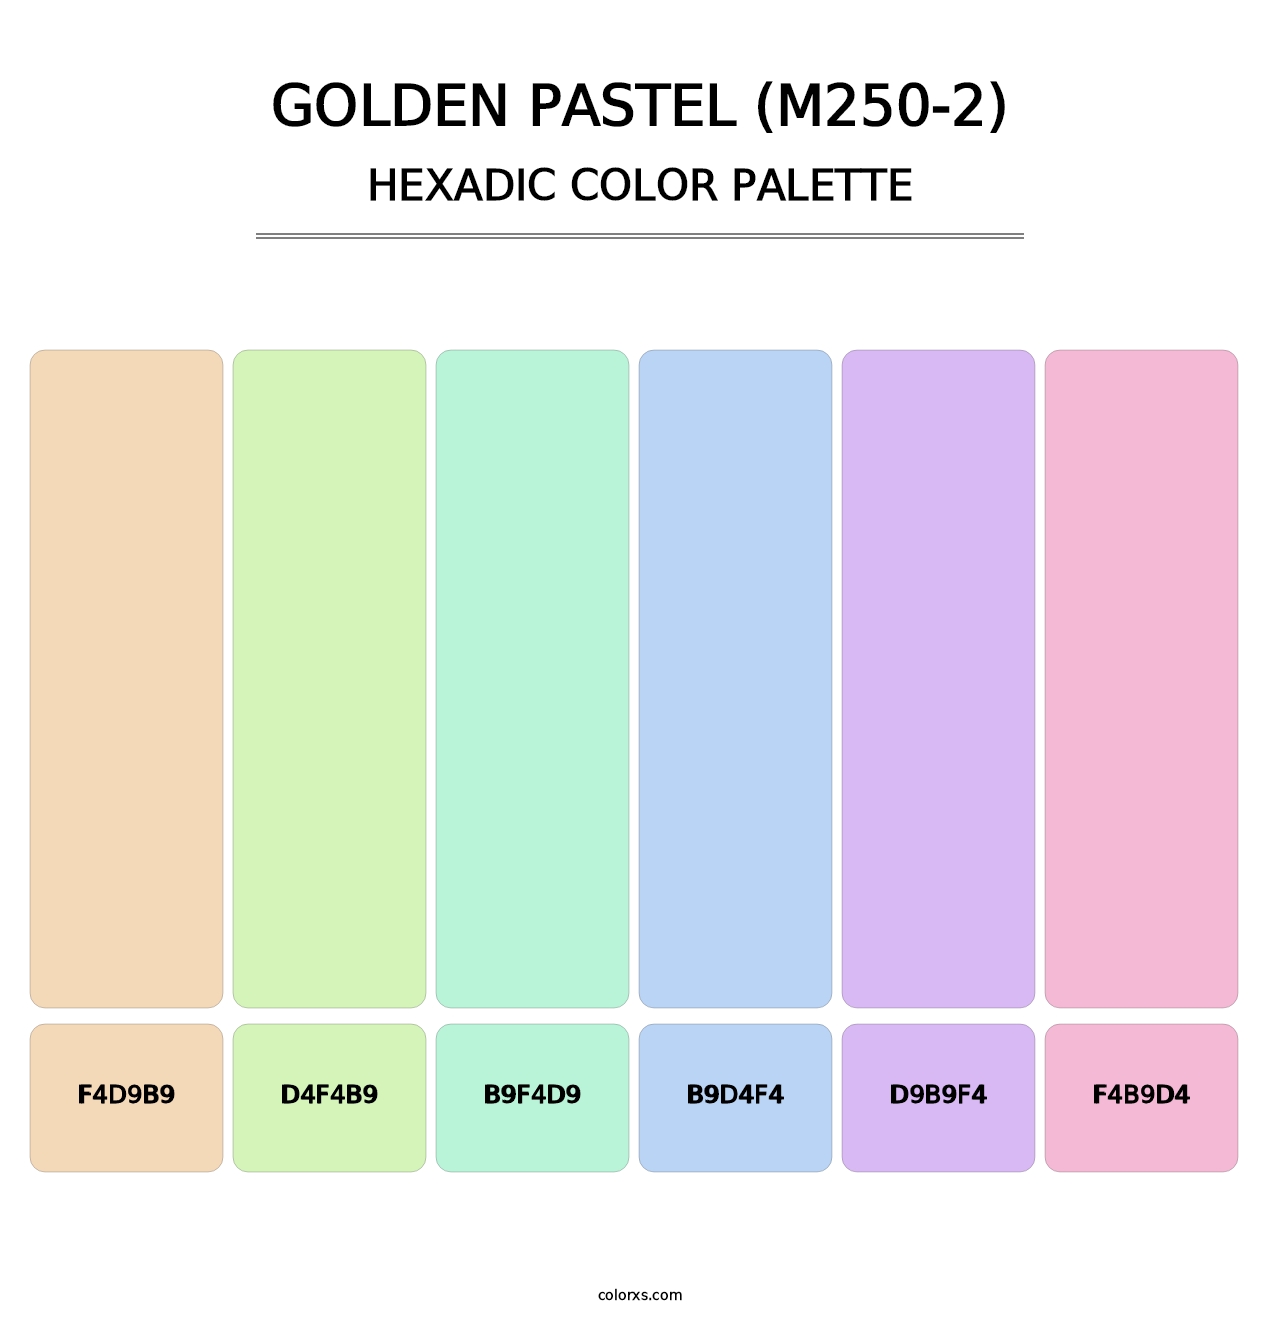 Golden Pastel (M250-2) - Hexadic Color Palette